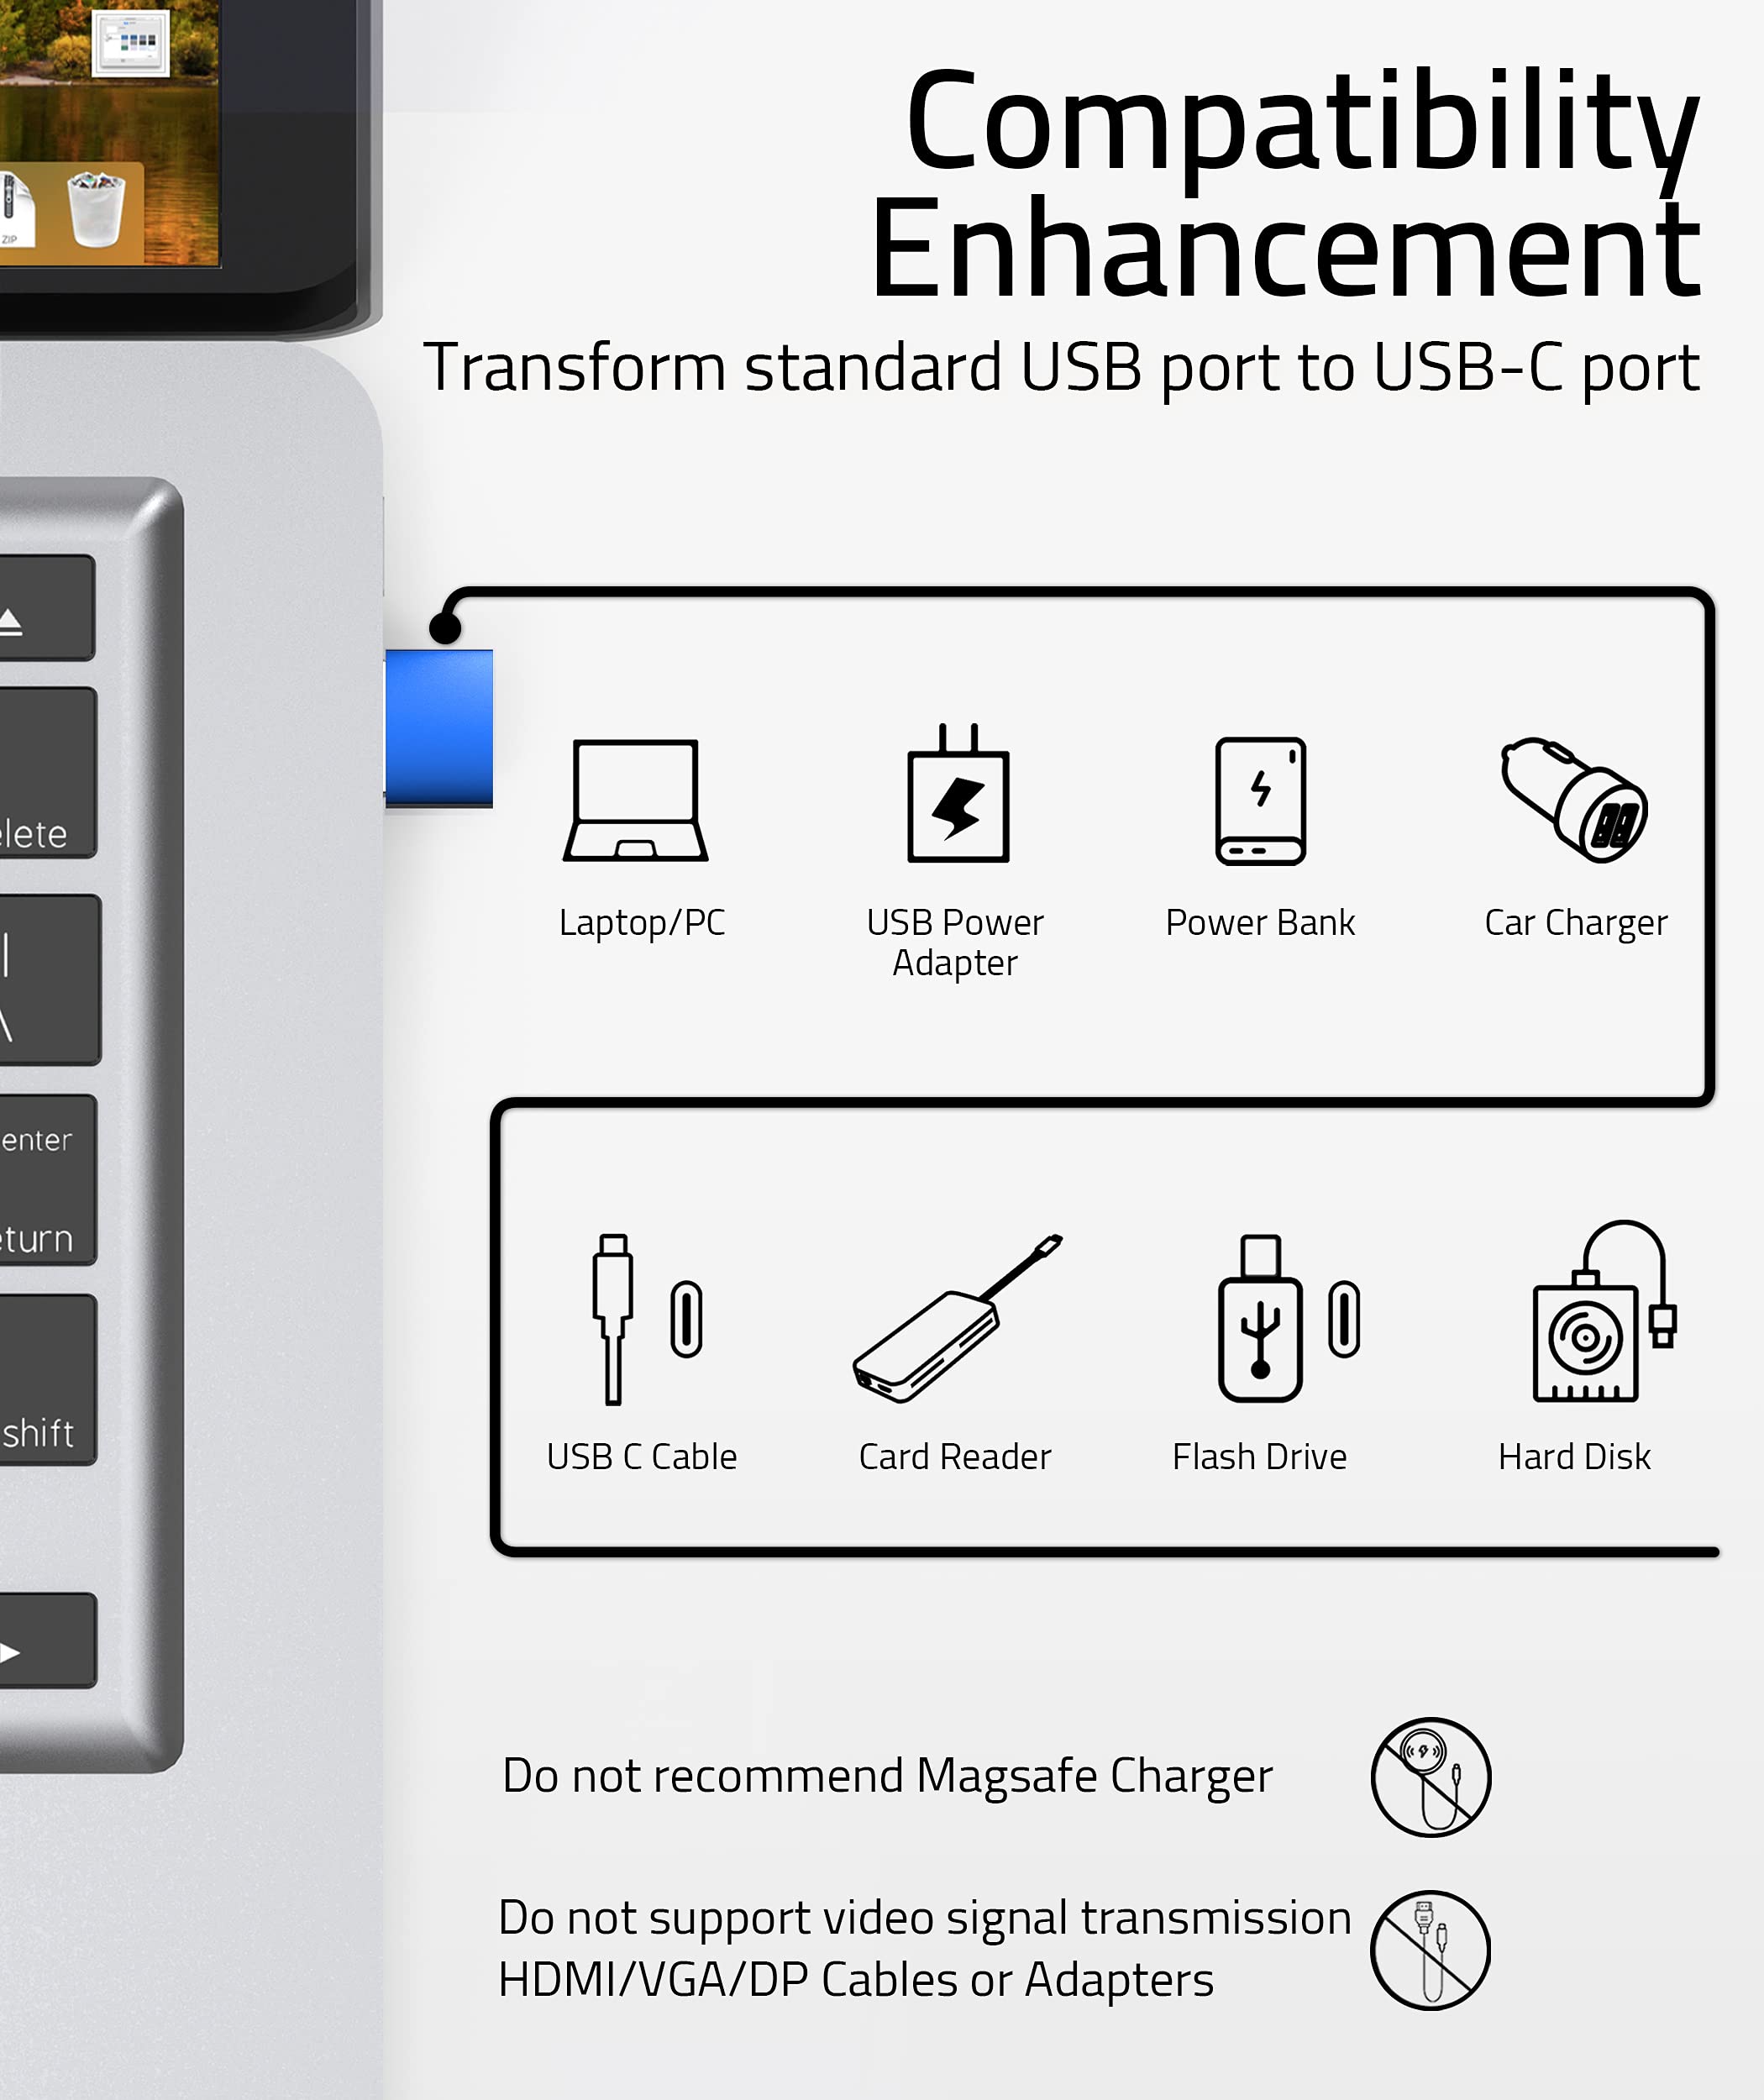 USB to USB C Port compatibility enhancement